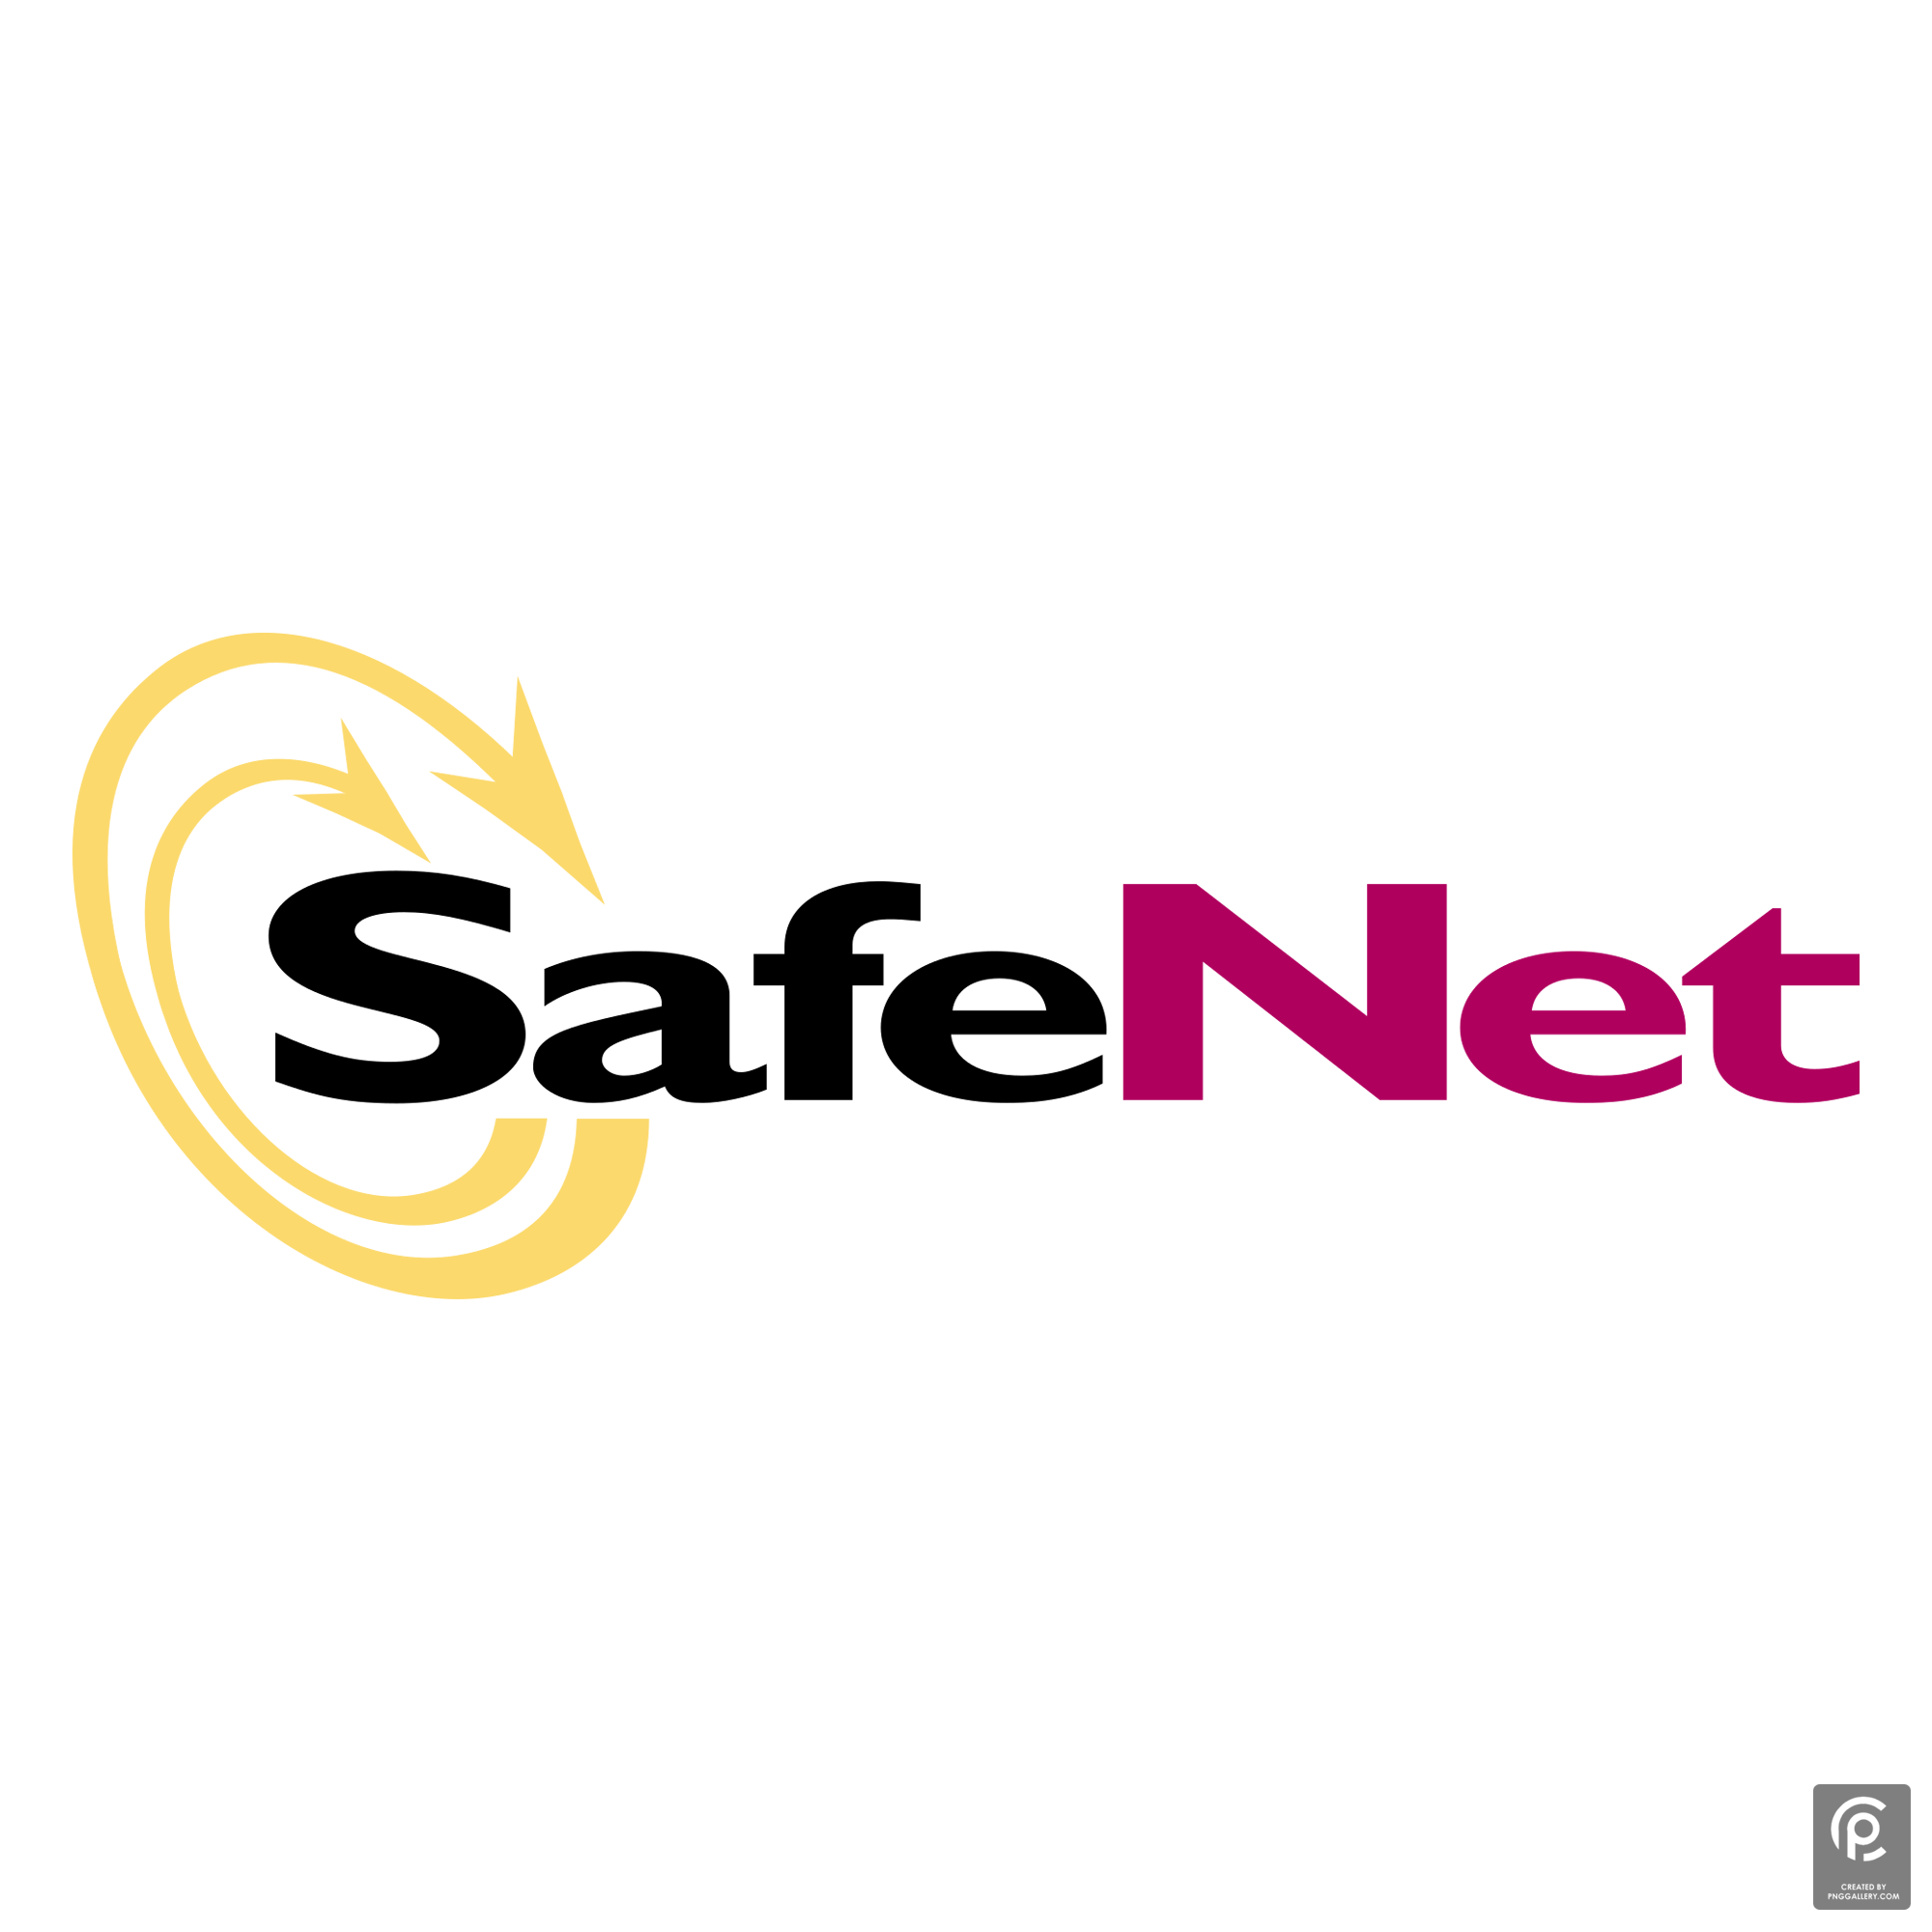 Safenet Logo Transparent Clipart